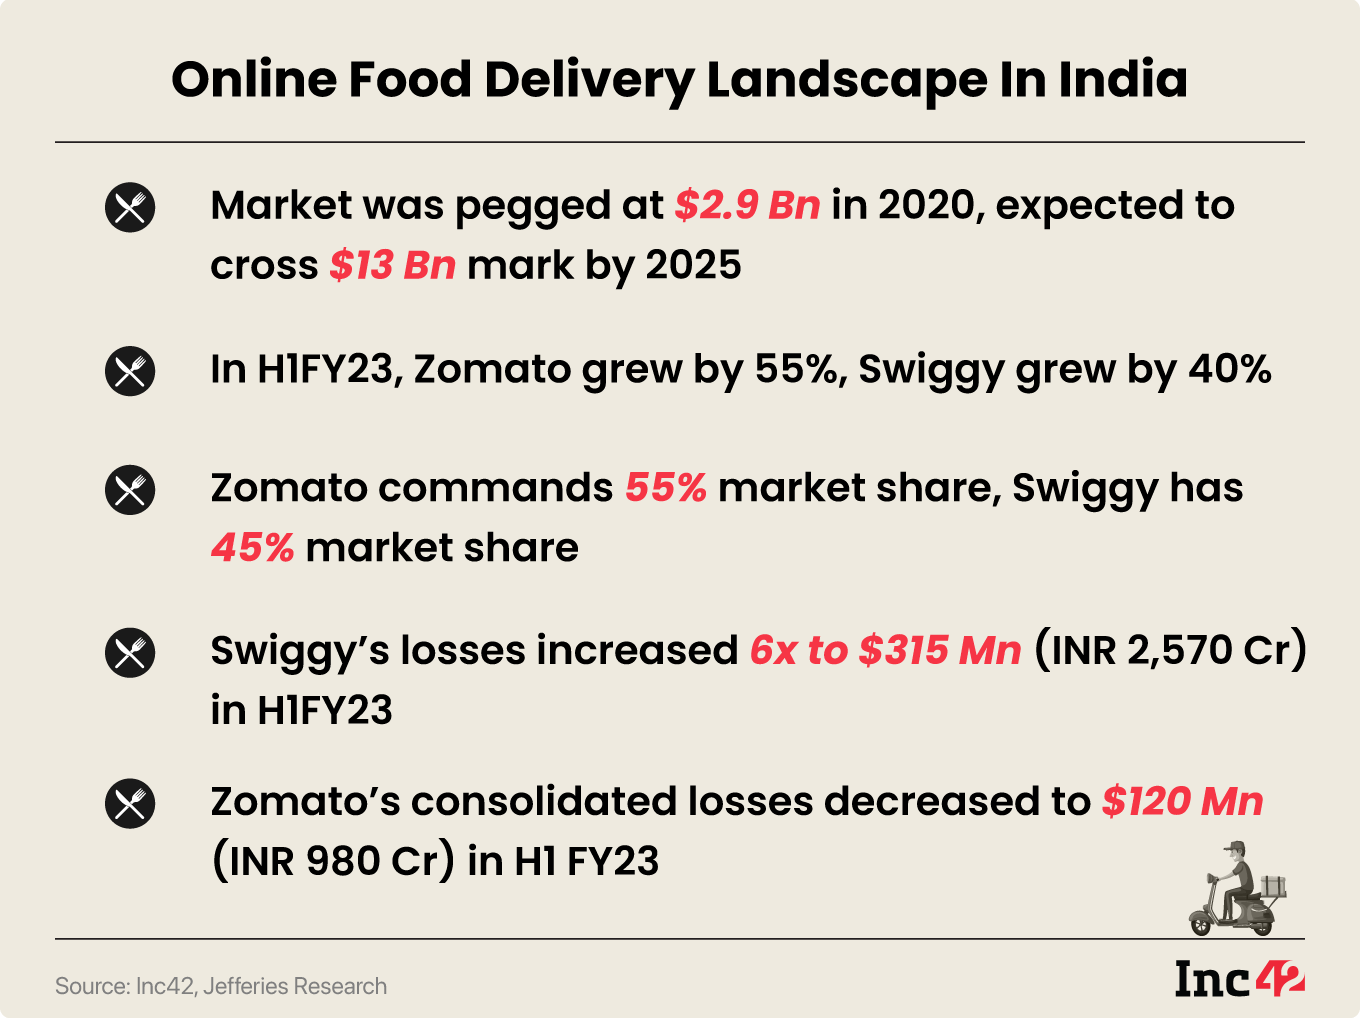 Online Food delivery landscape in India